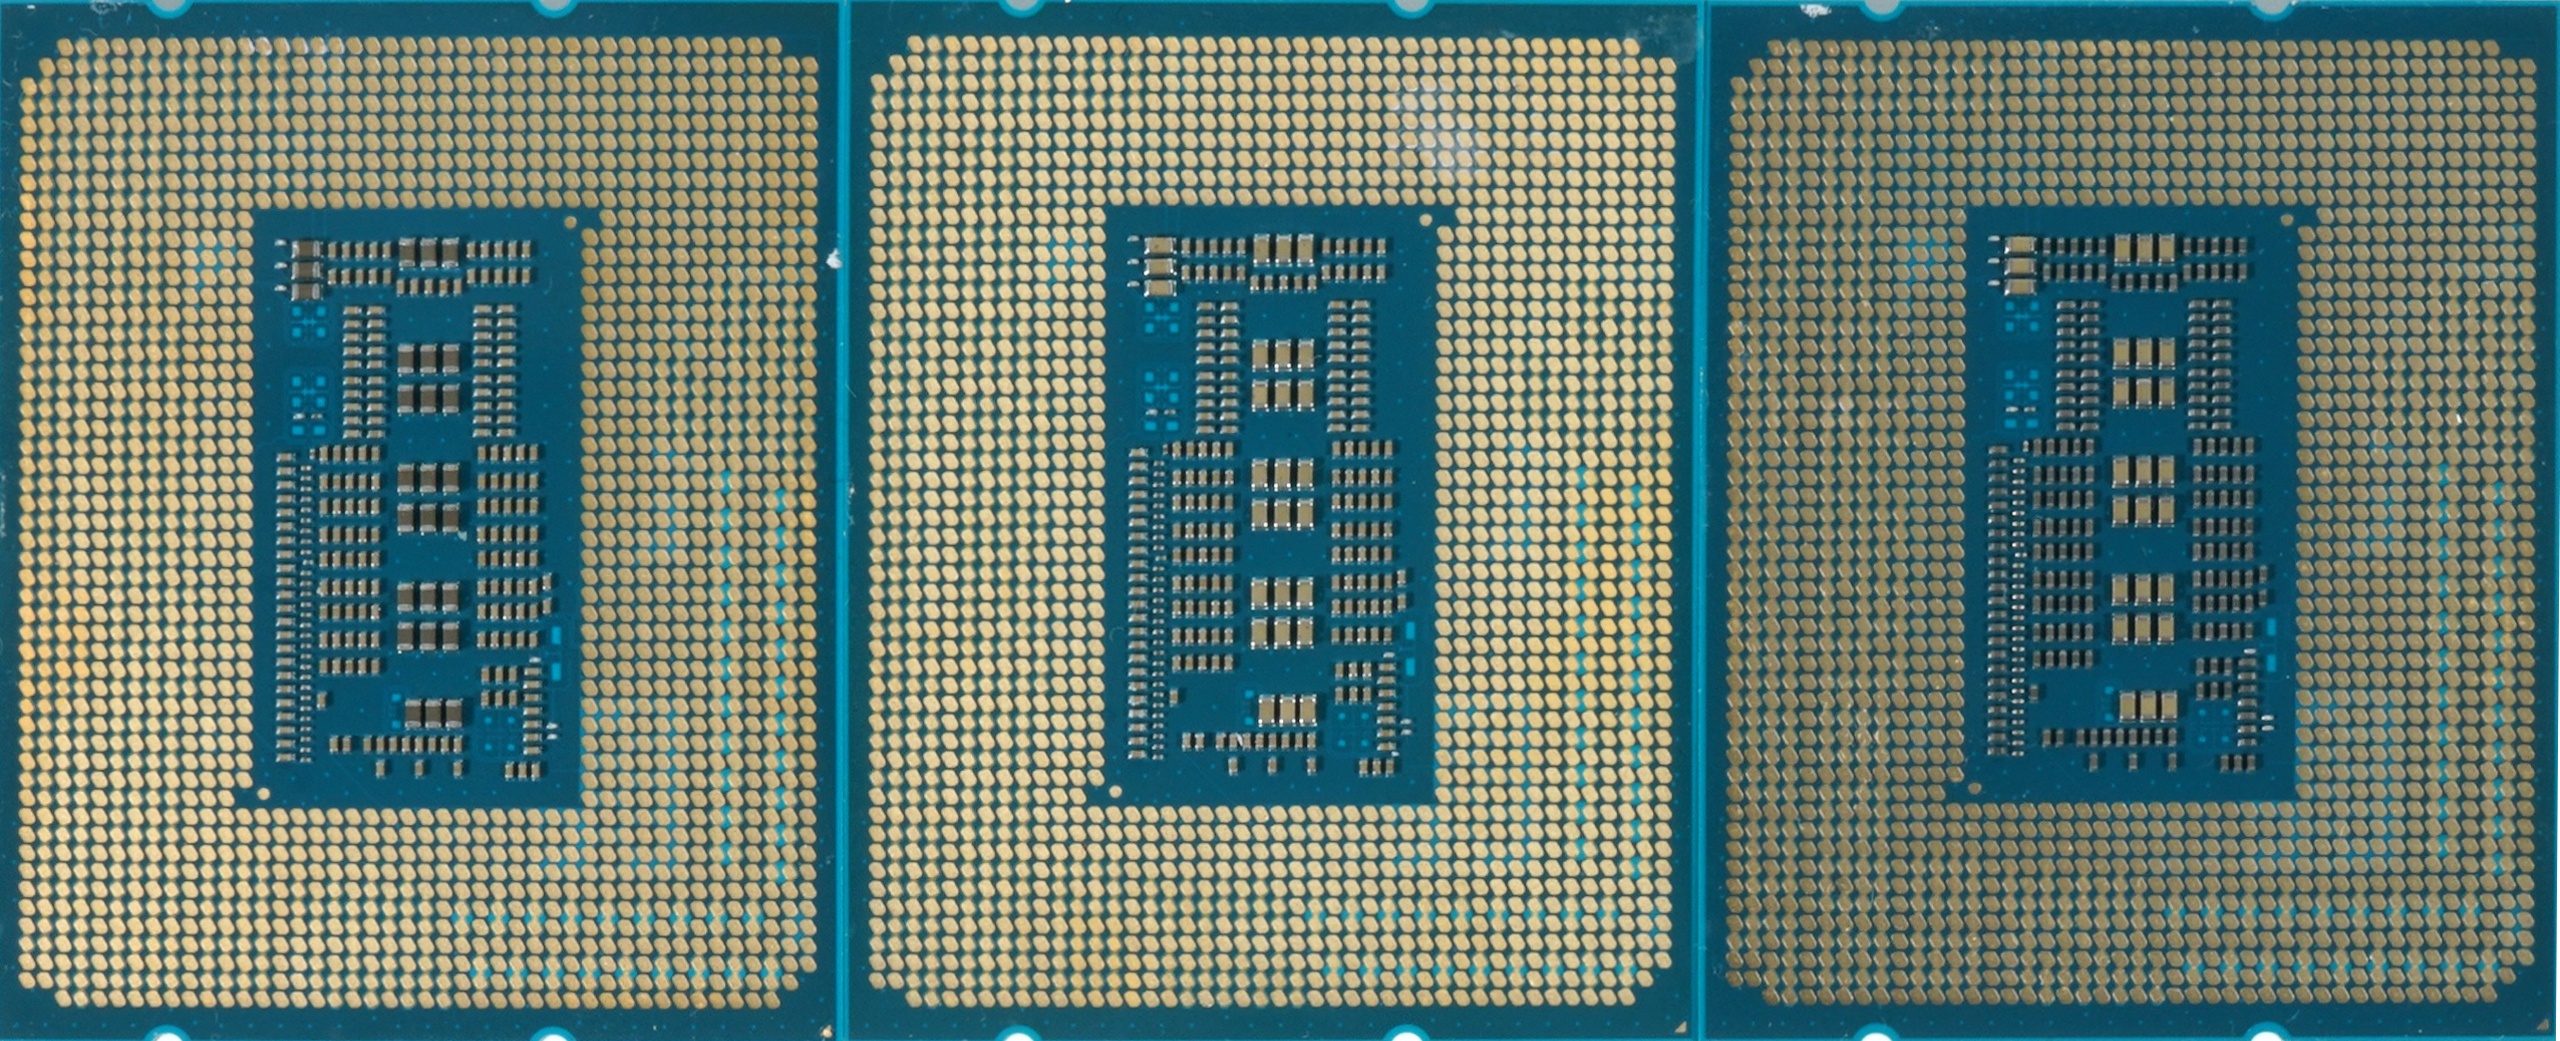 igorslab] Intel ILM Roundup